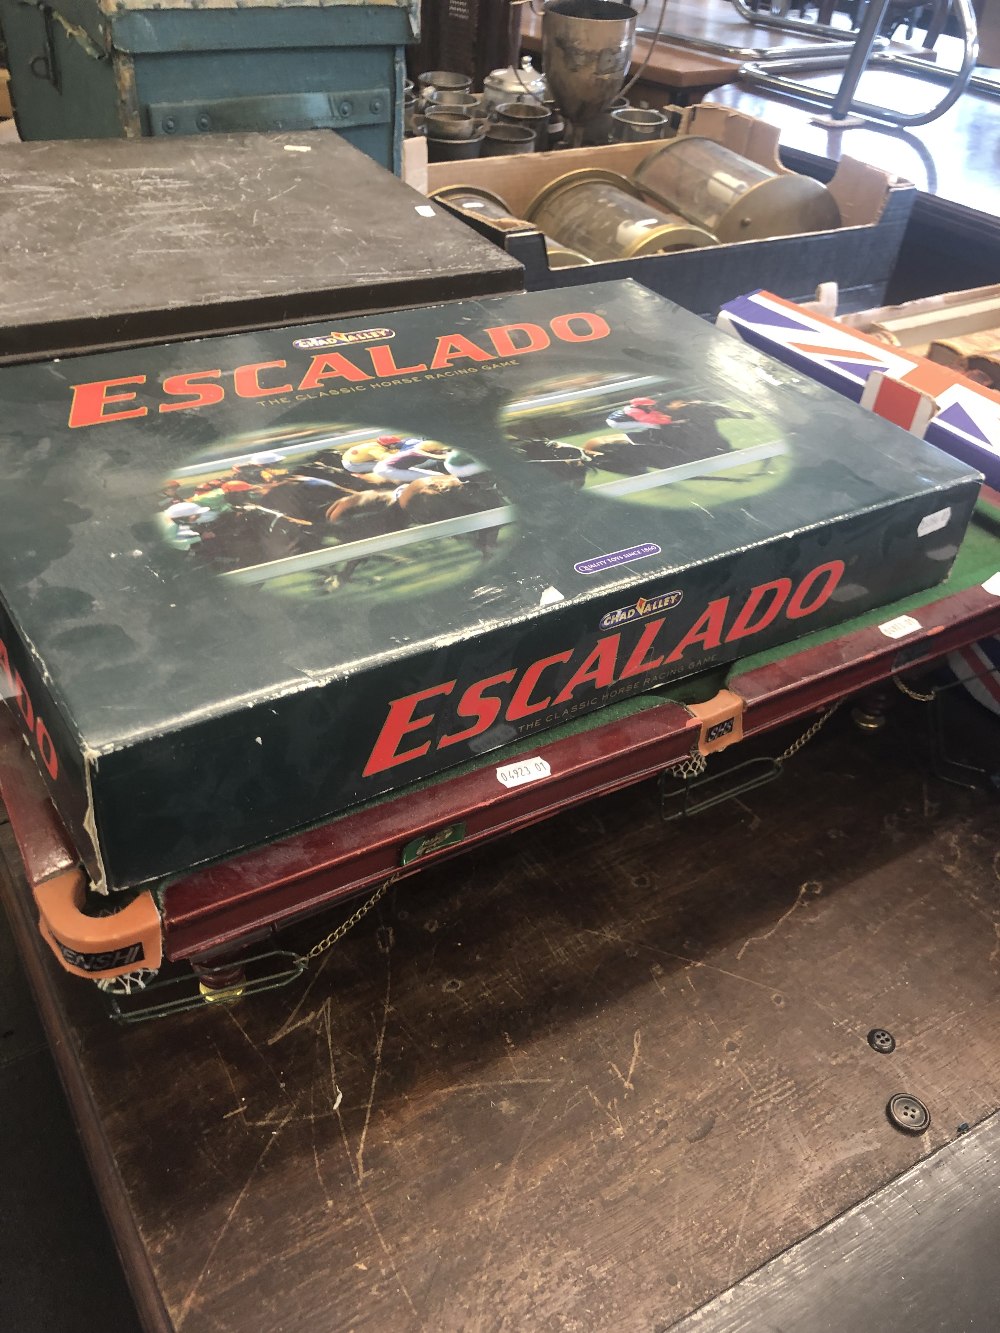 An Escalado game and miniature pool table